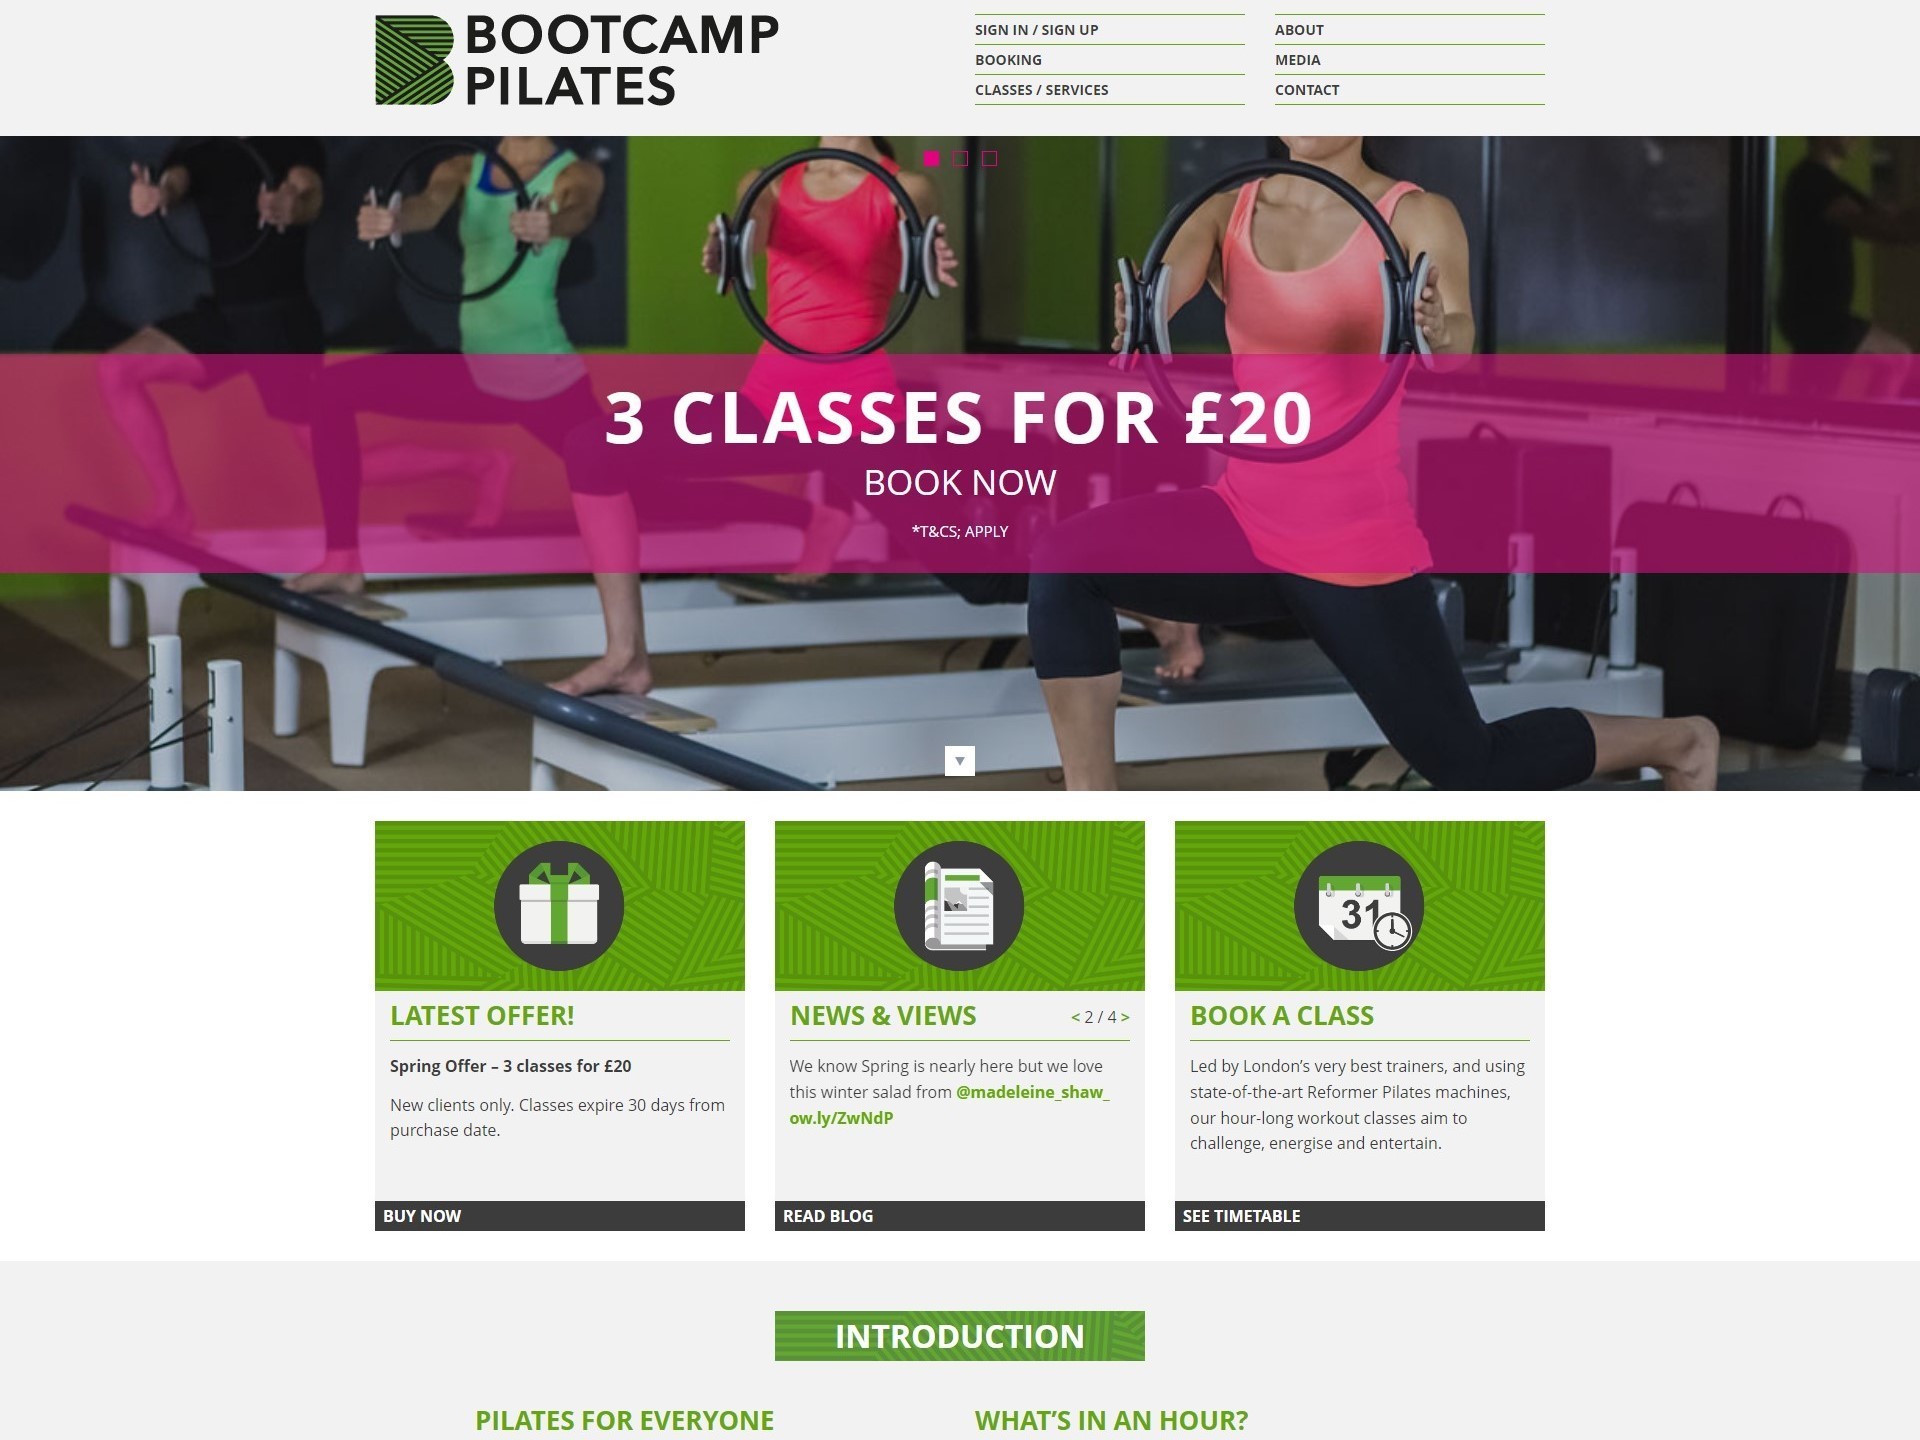 The previous Bootcamp Pilates website, shown on desktop